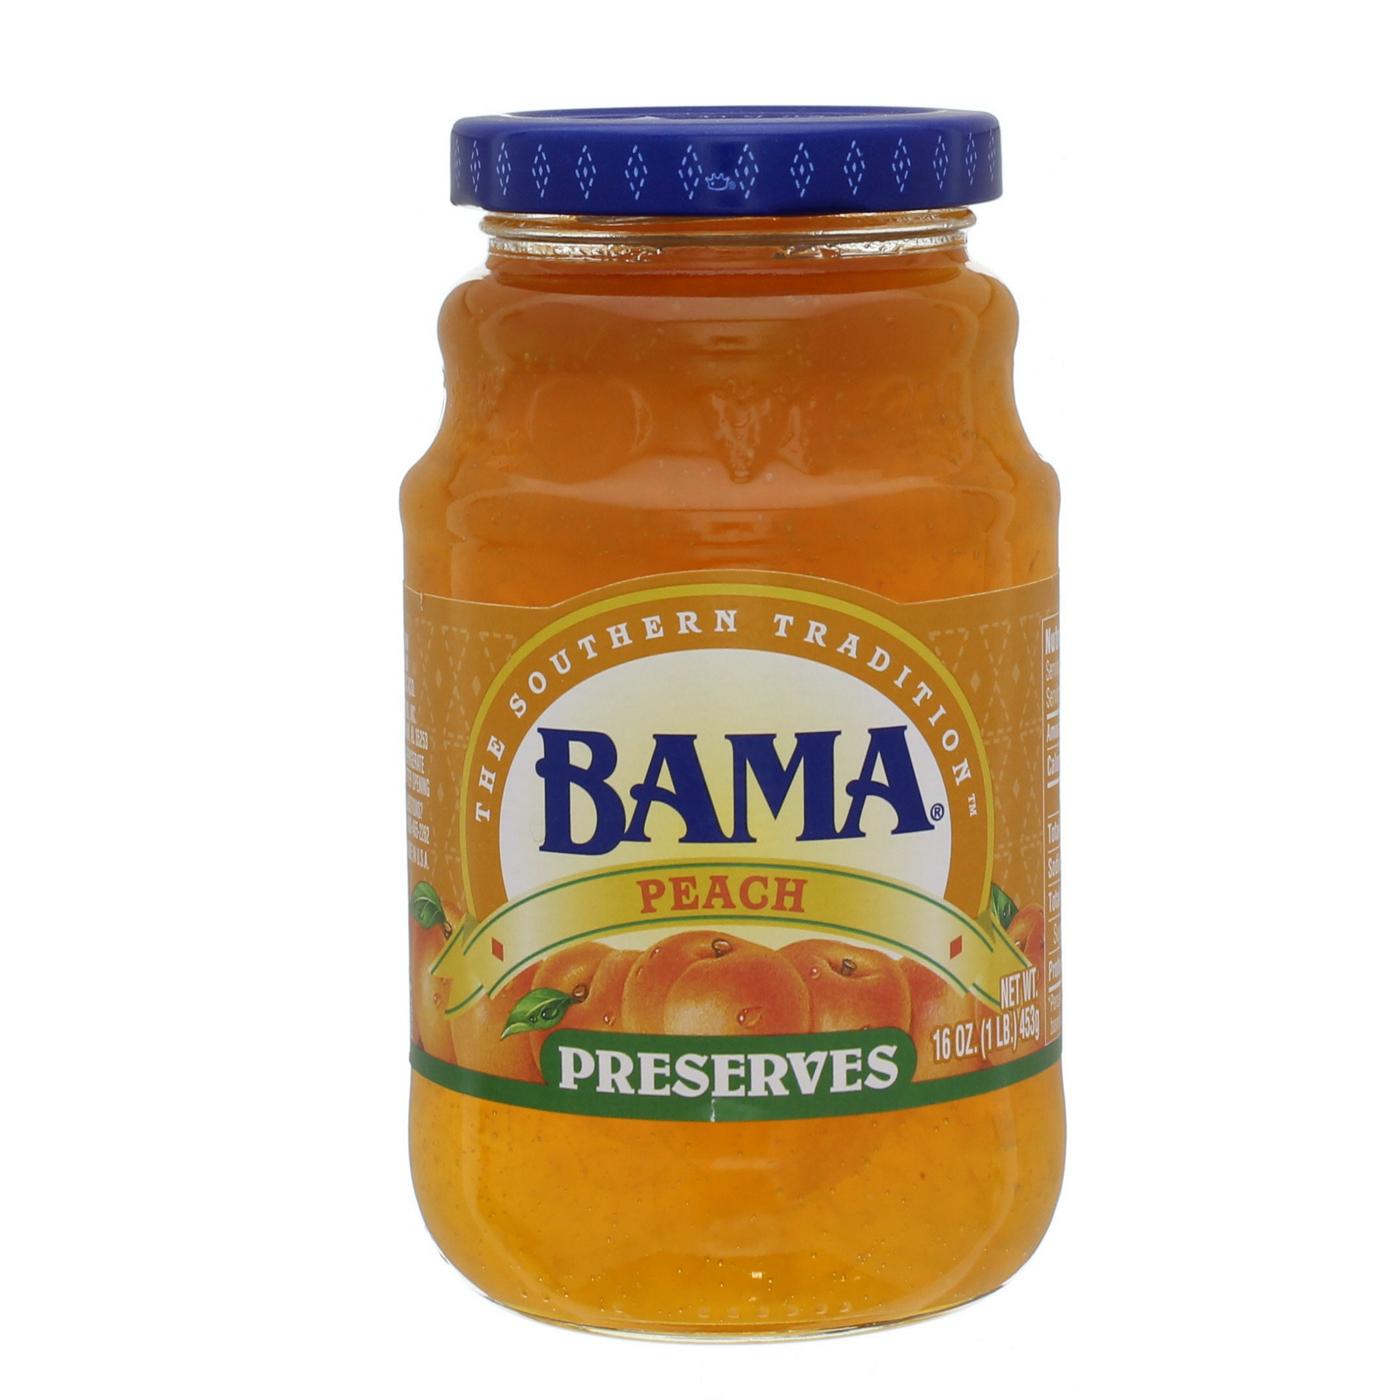 Bama Peach Preserves; image 1 of 2